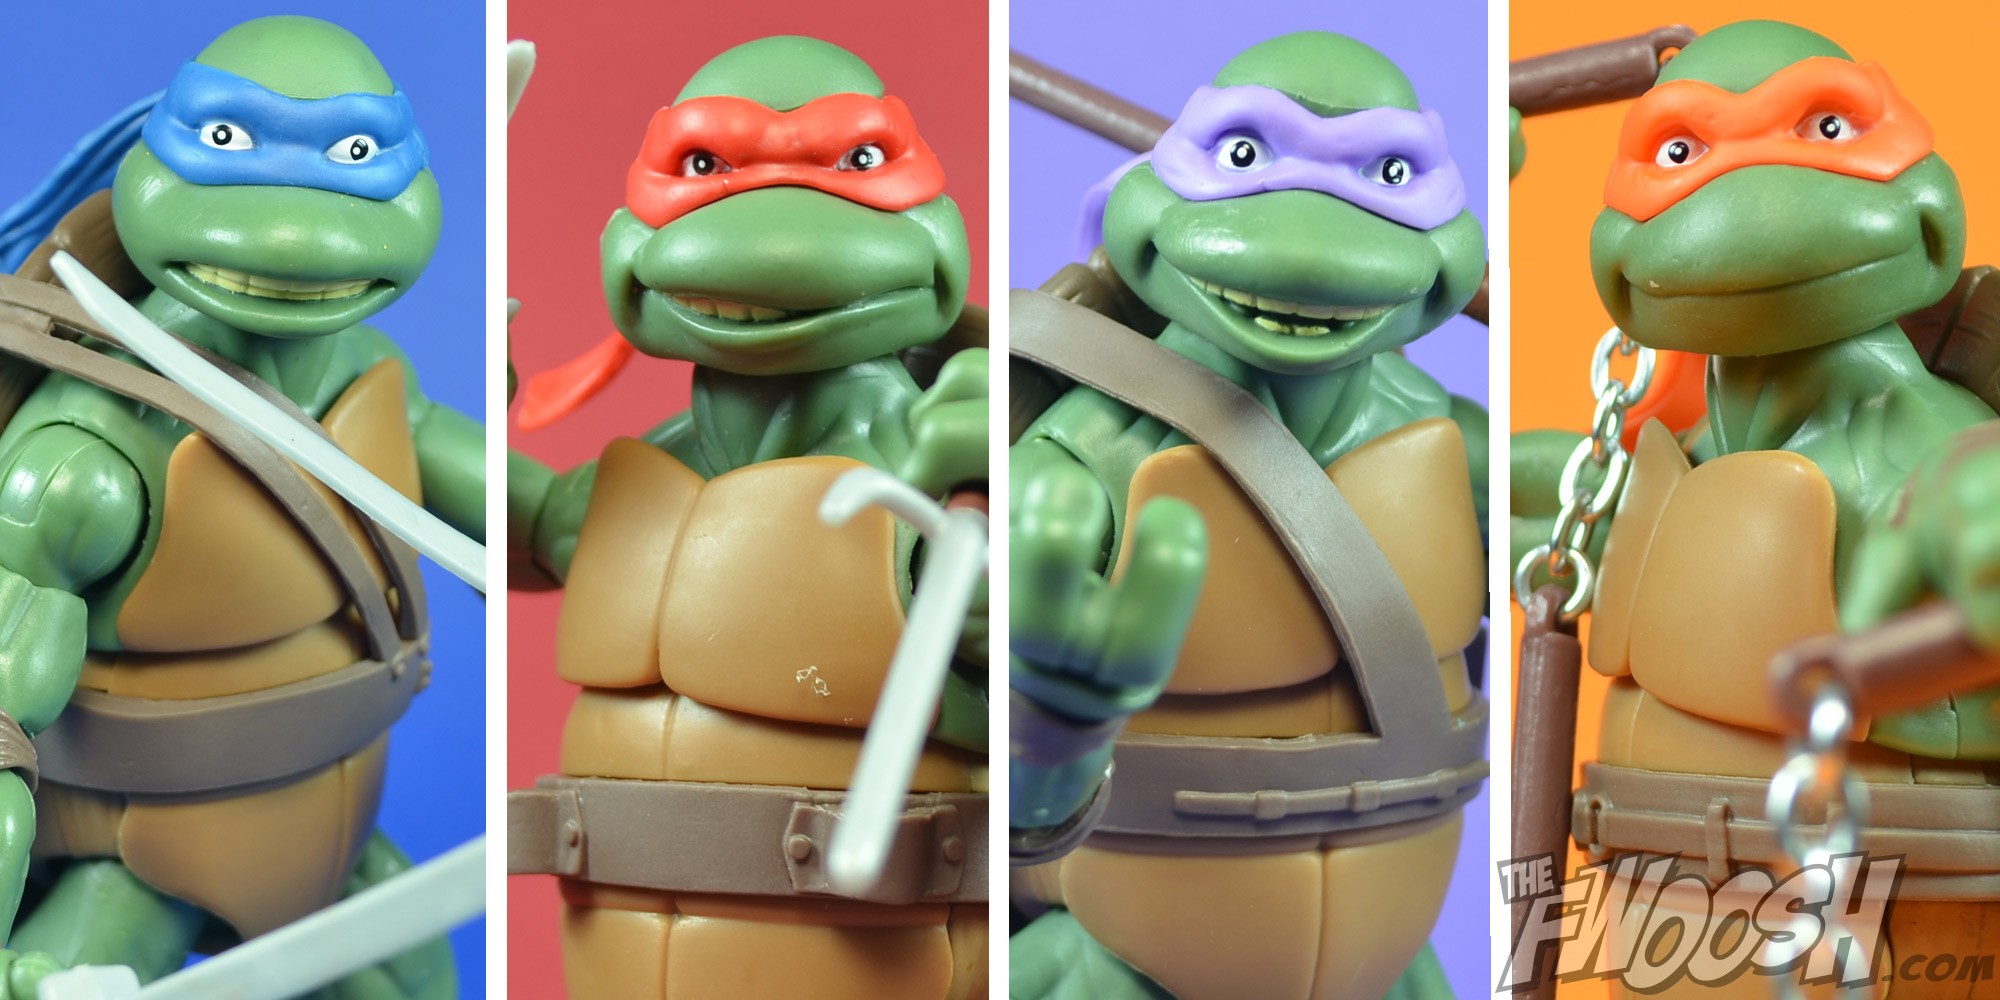 https://thefwoosh.com/wp-content/uploads/2014/07/laymates-Teenage-Mutant-Ninja-Turtles-Movie-Figures-Review-feature.jpg